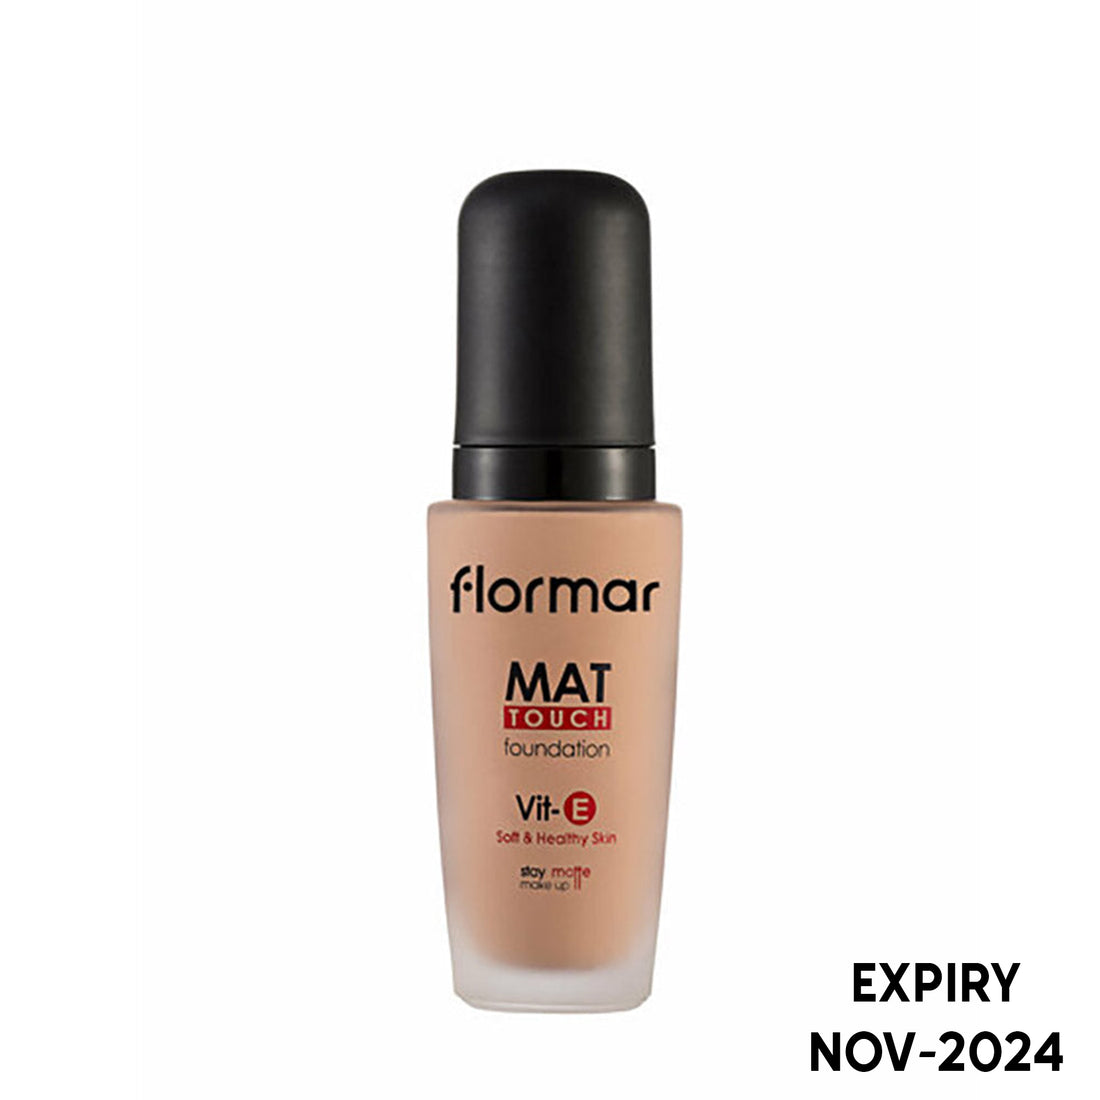 Flormar Matte Touch Foundation (30ml) -M302 Golden sand